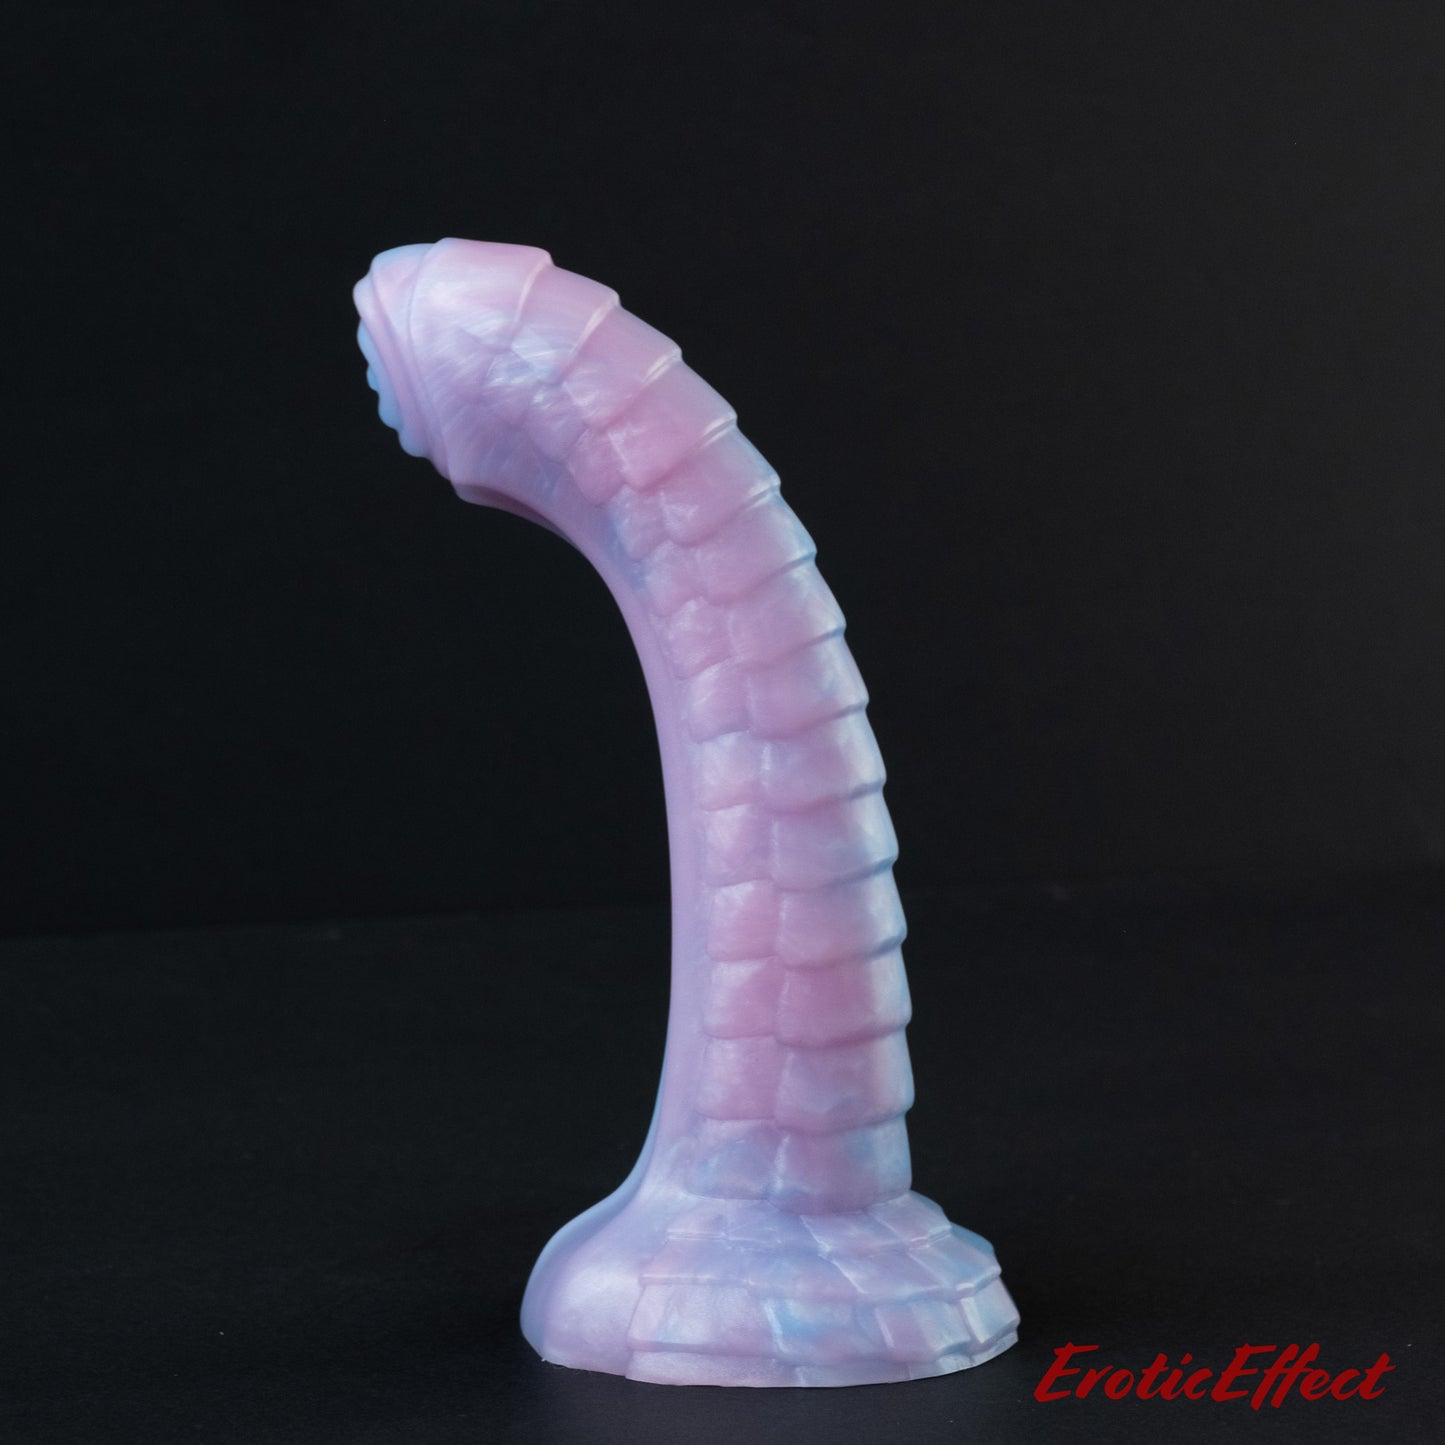 Raithor Dragon Fantasy Silicone Dildo - Large - Medium Firmness - Pink/White/Blue Shimmer